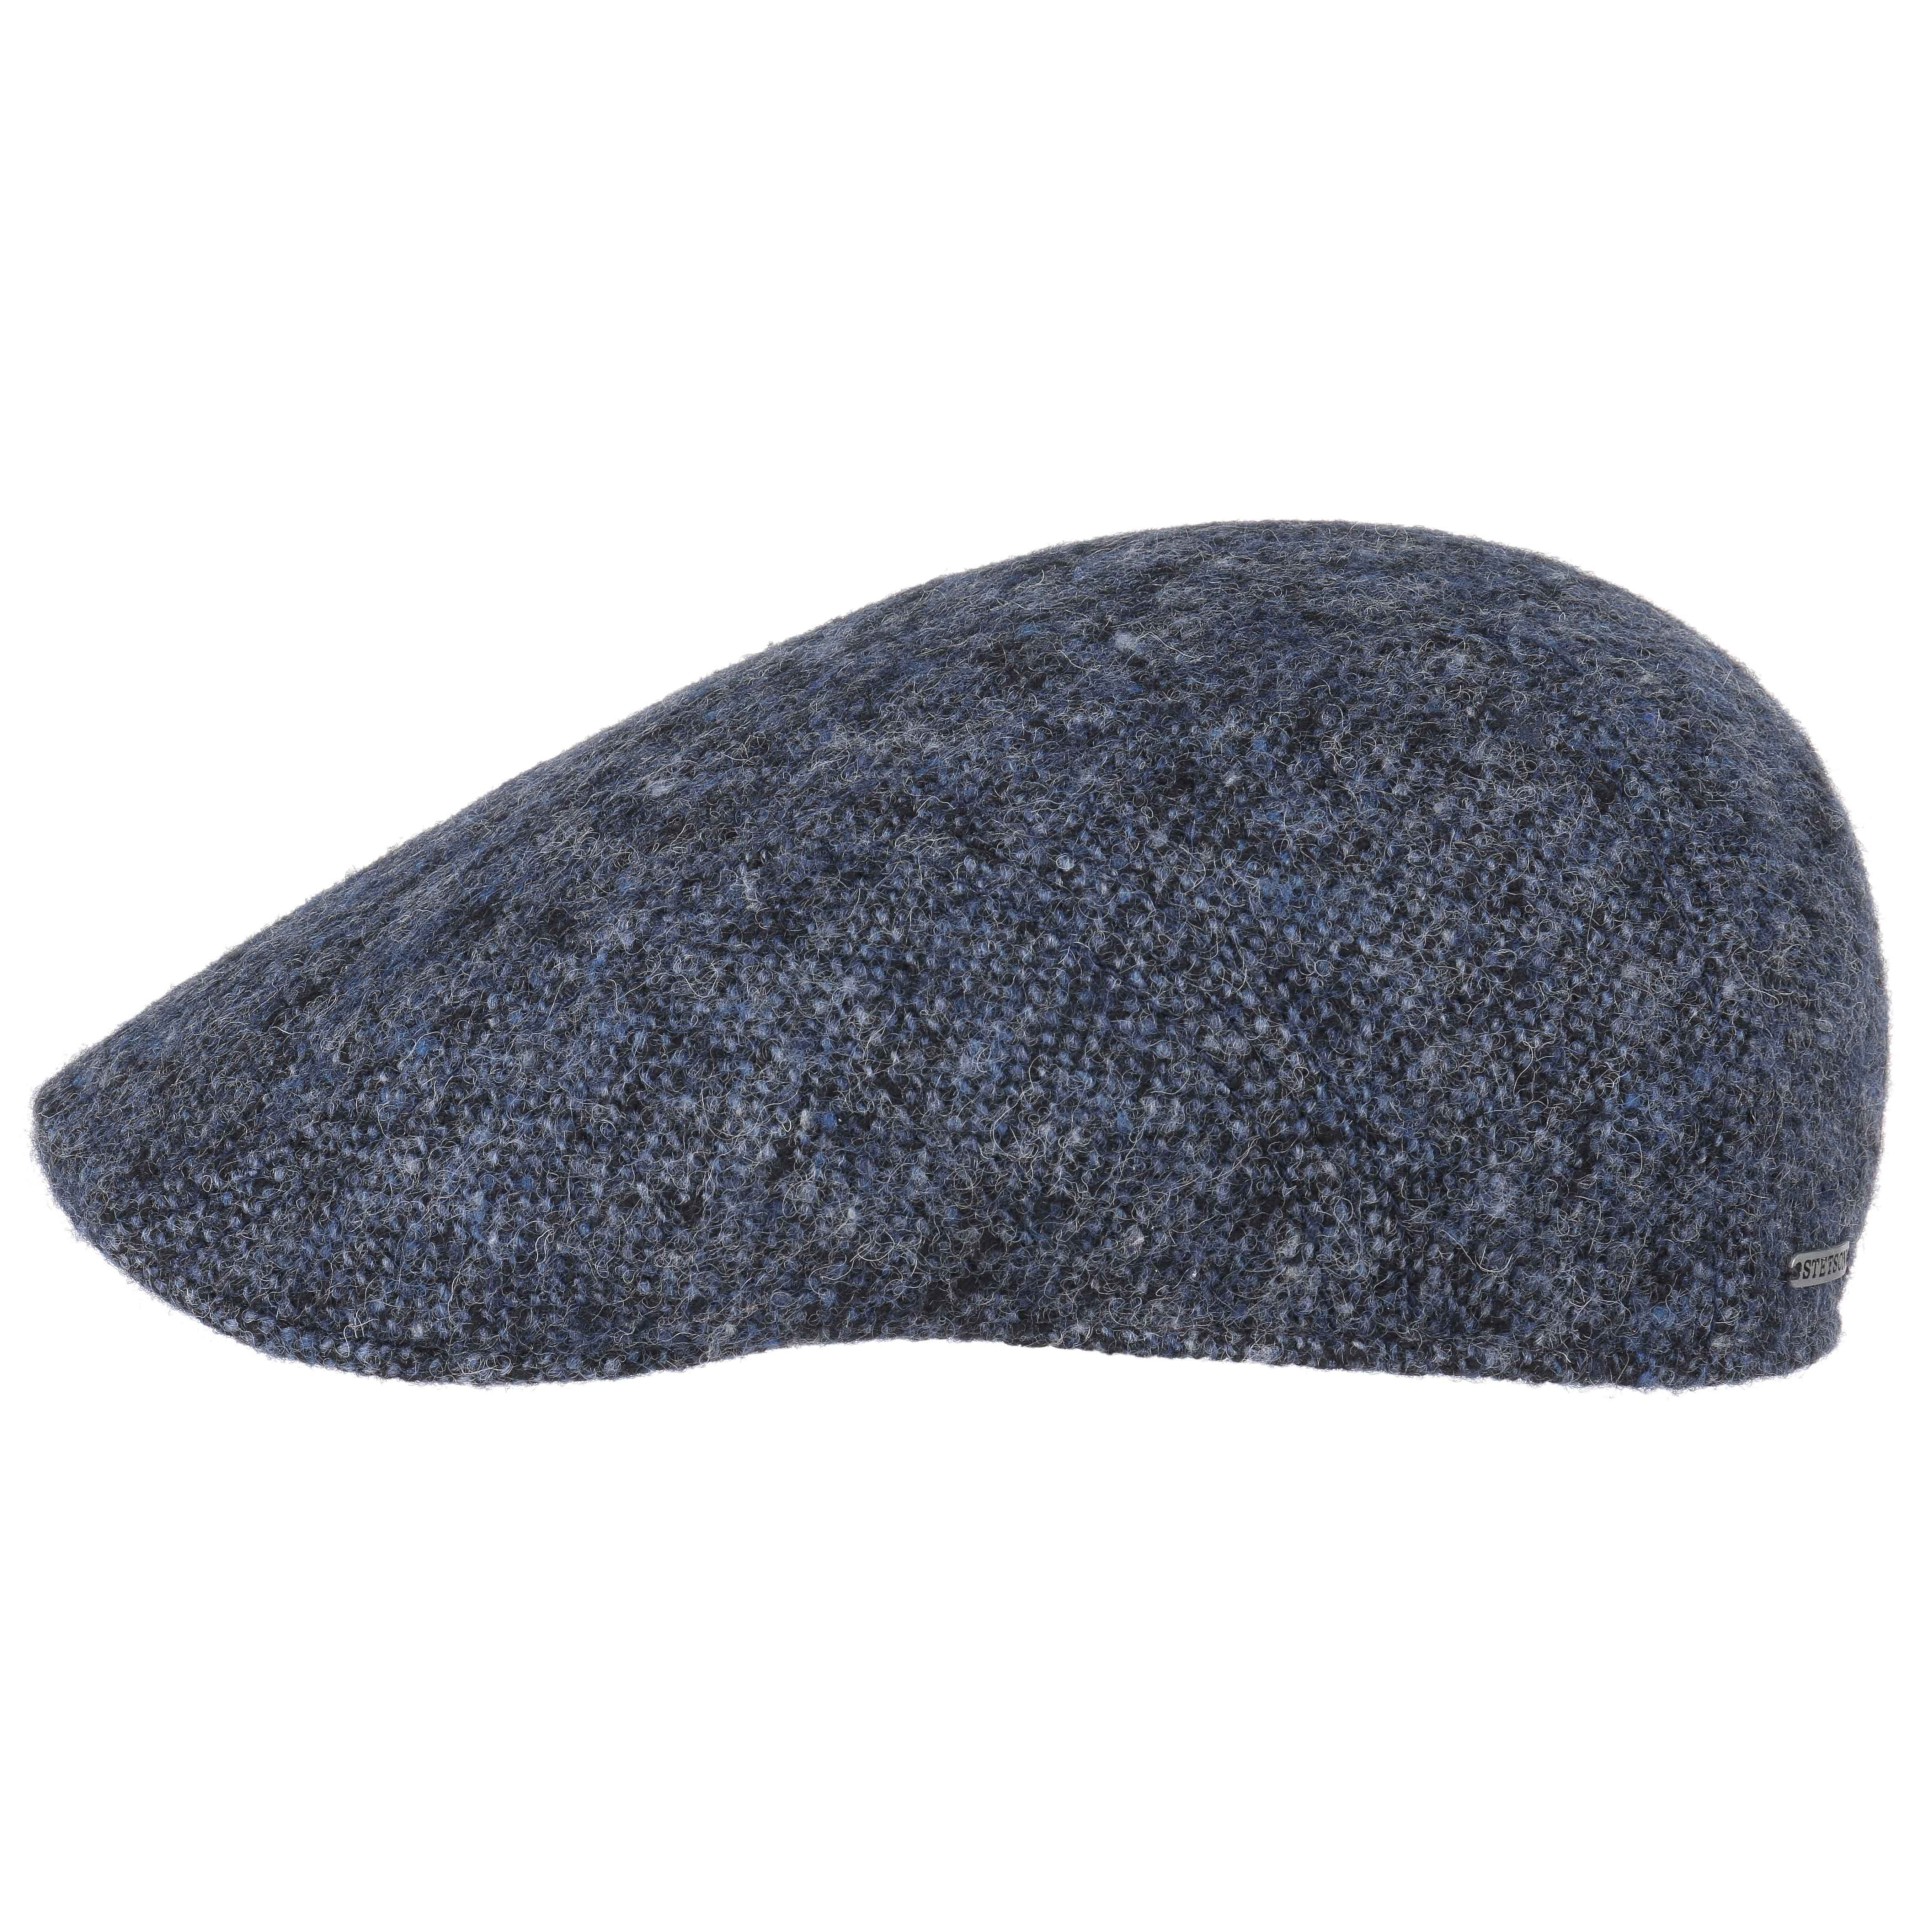 Stetson - Stetson Ivy Cap Donegal/Tweed Wirgin Wool/Yün El Yapımı Lacivert Şapka